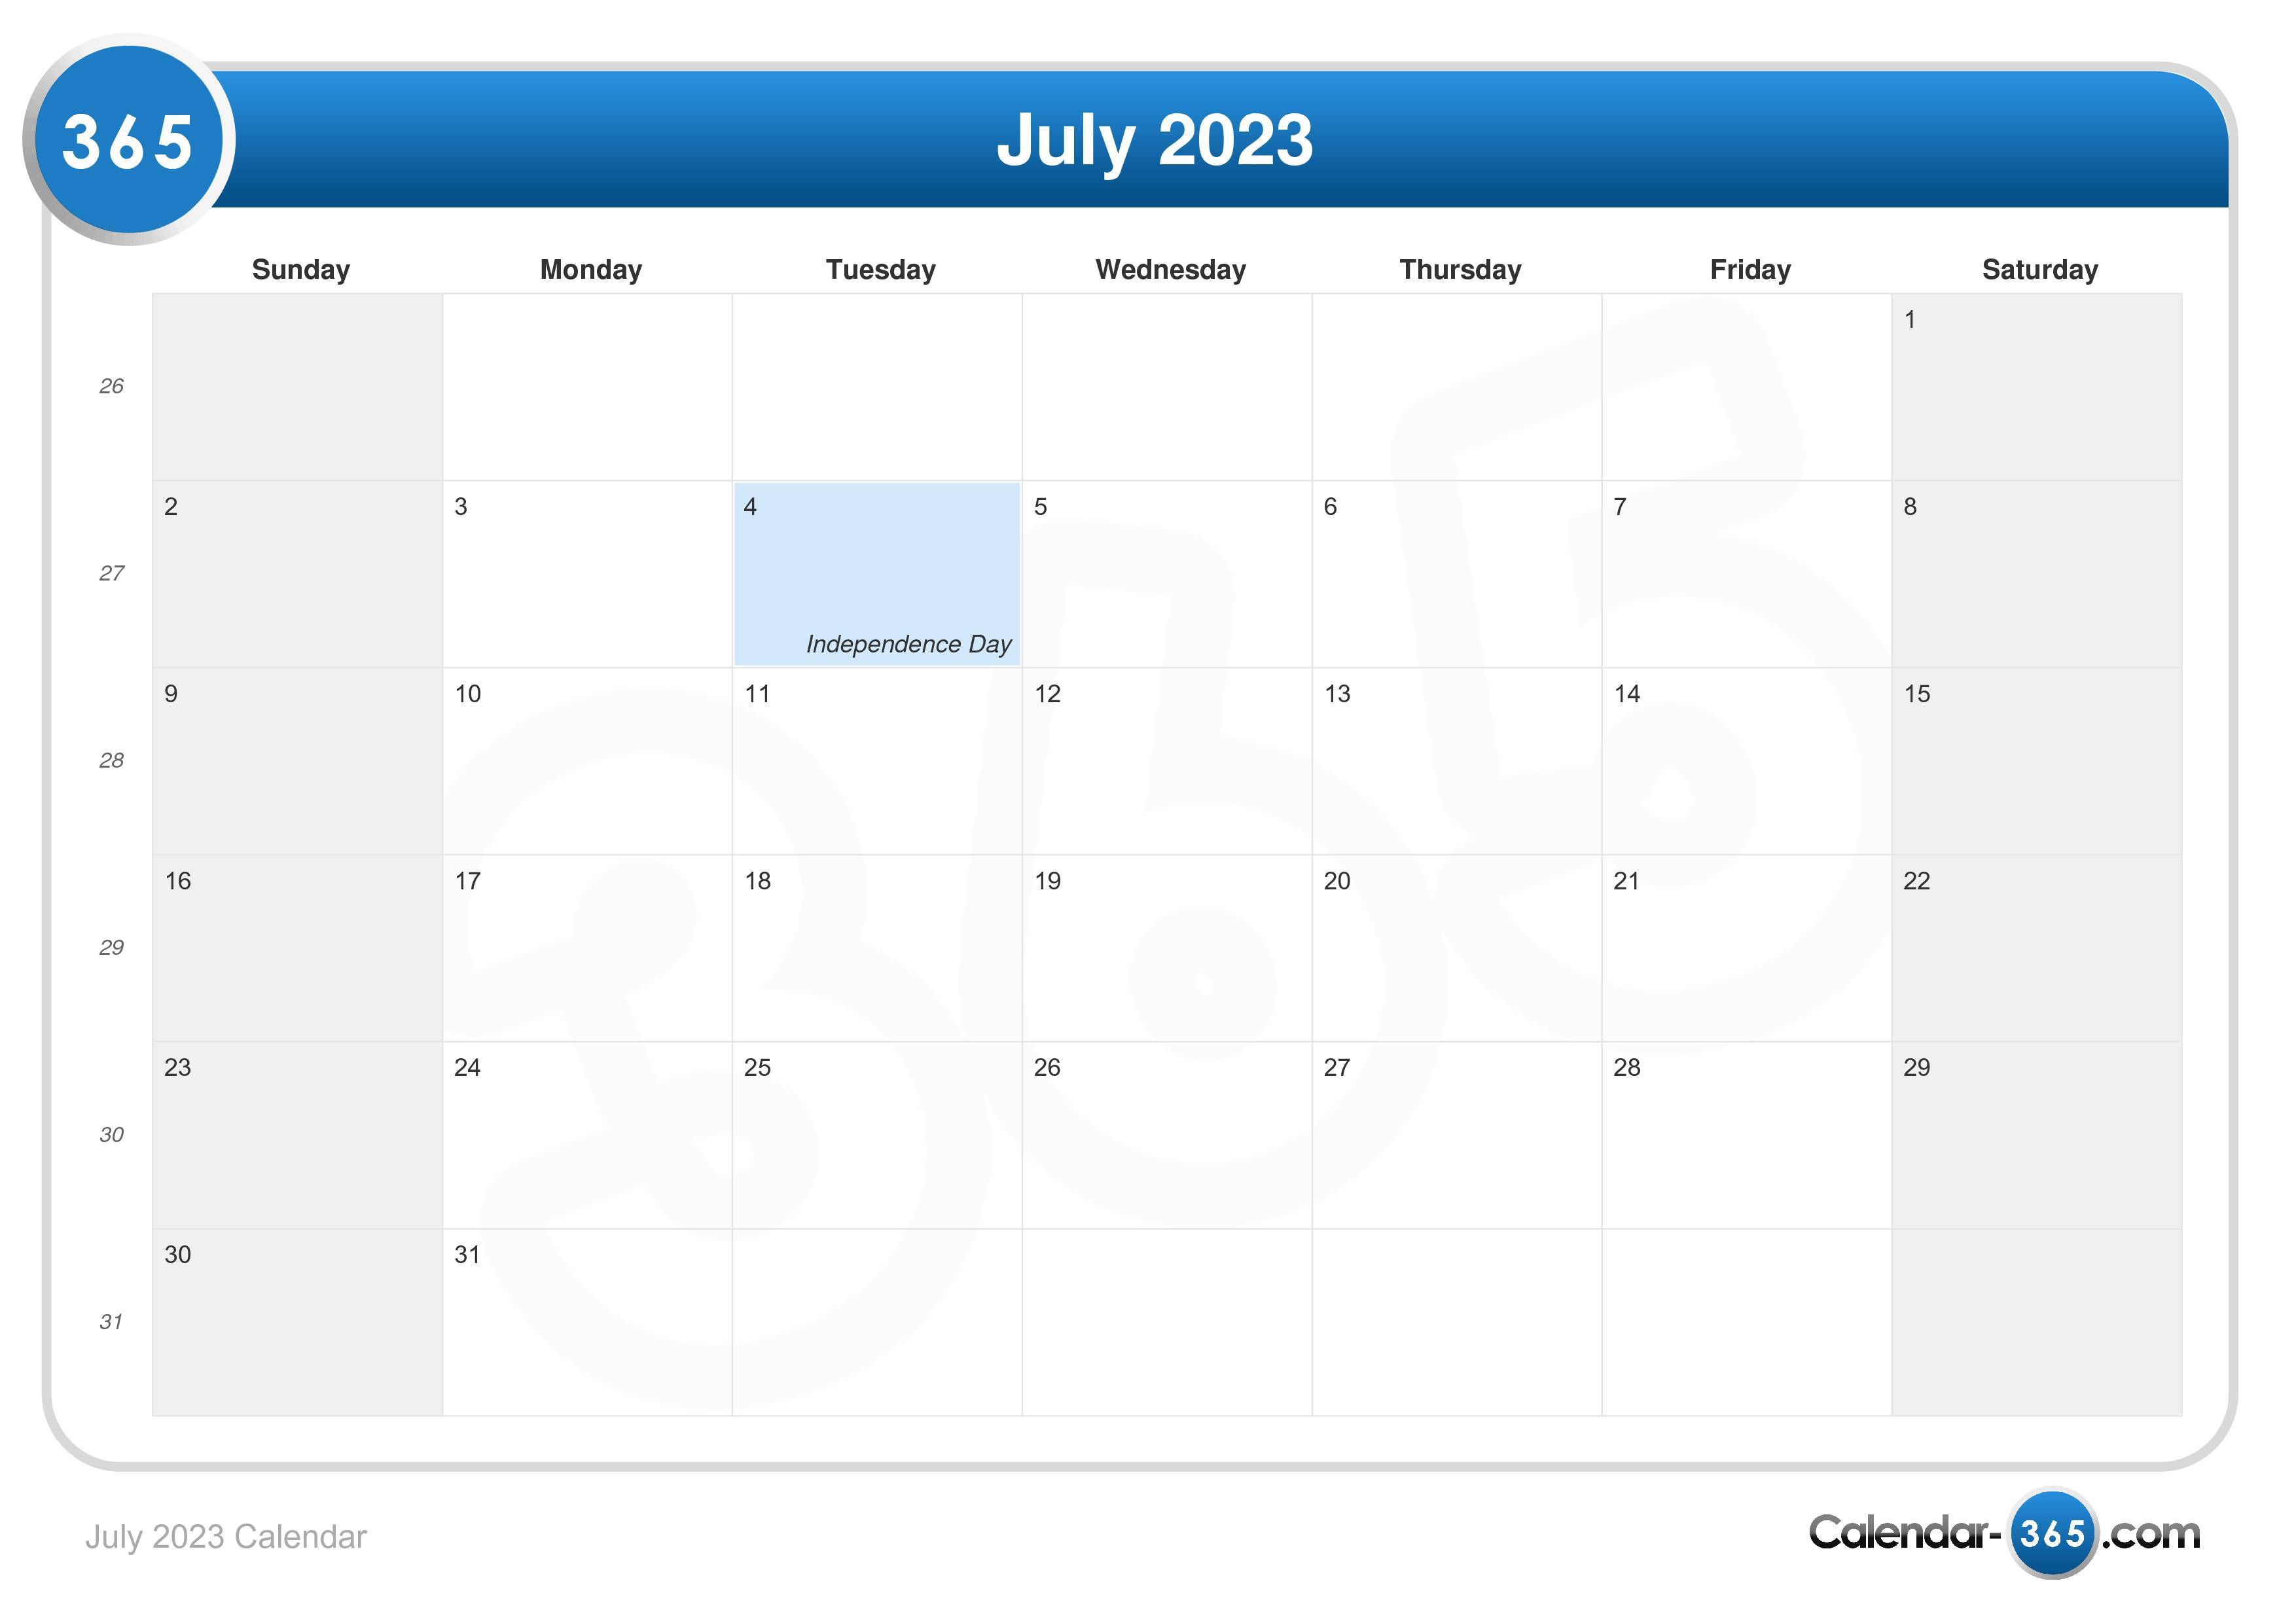 July 28 2023 2023 Calendar